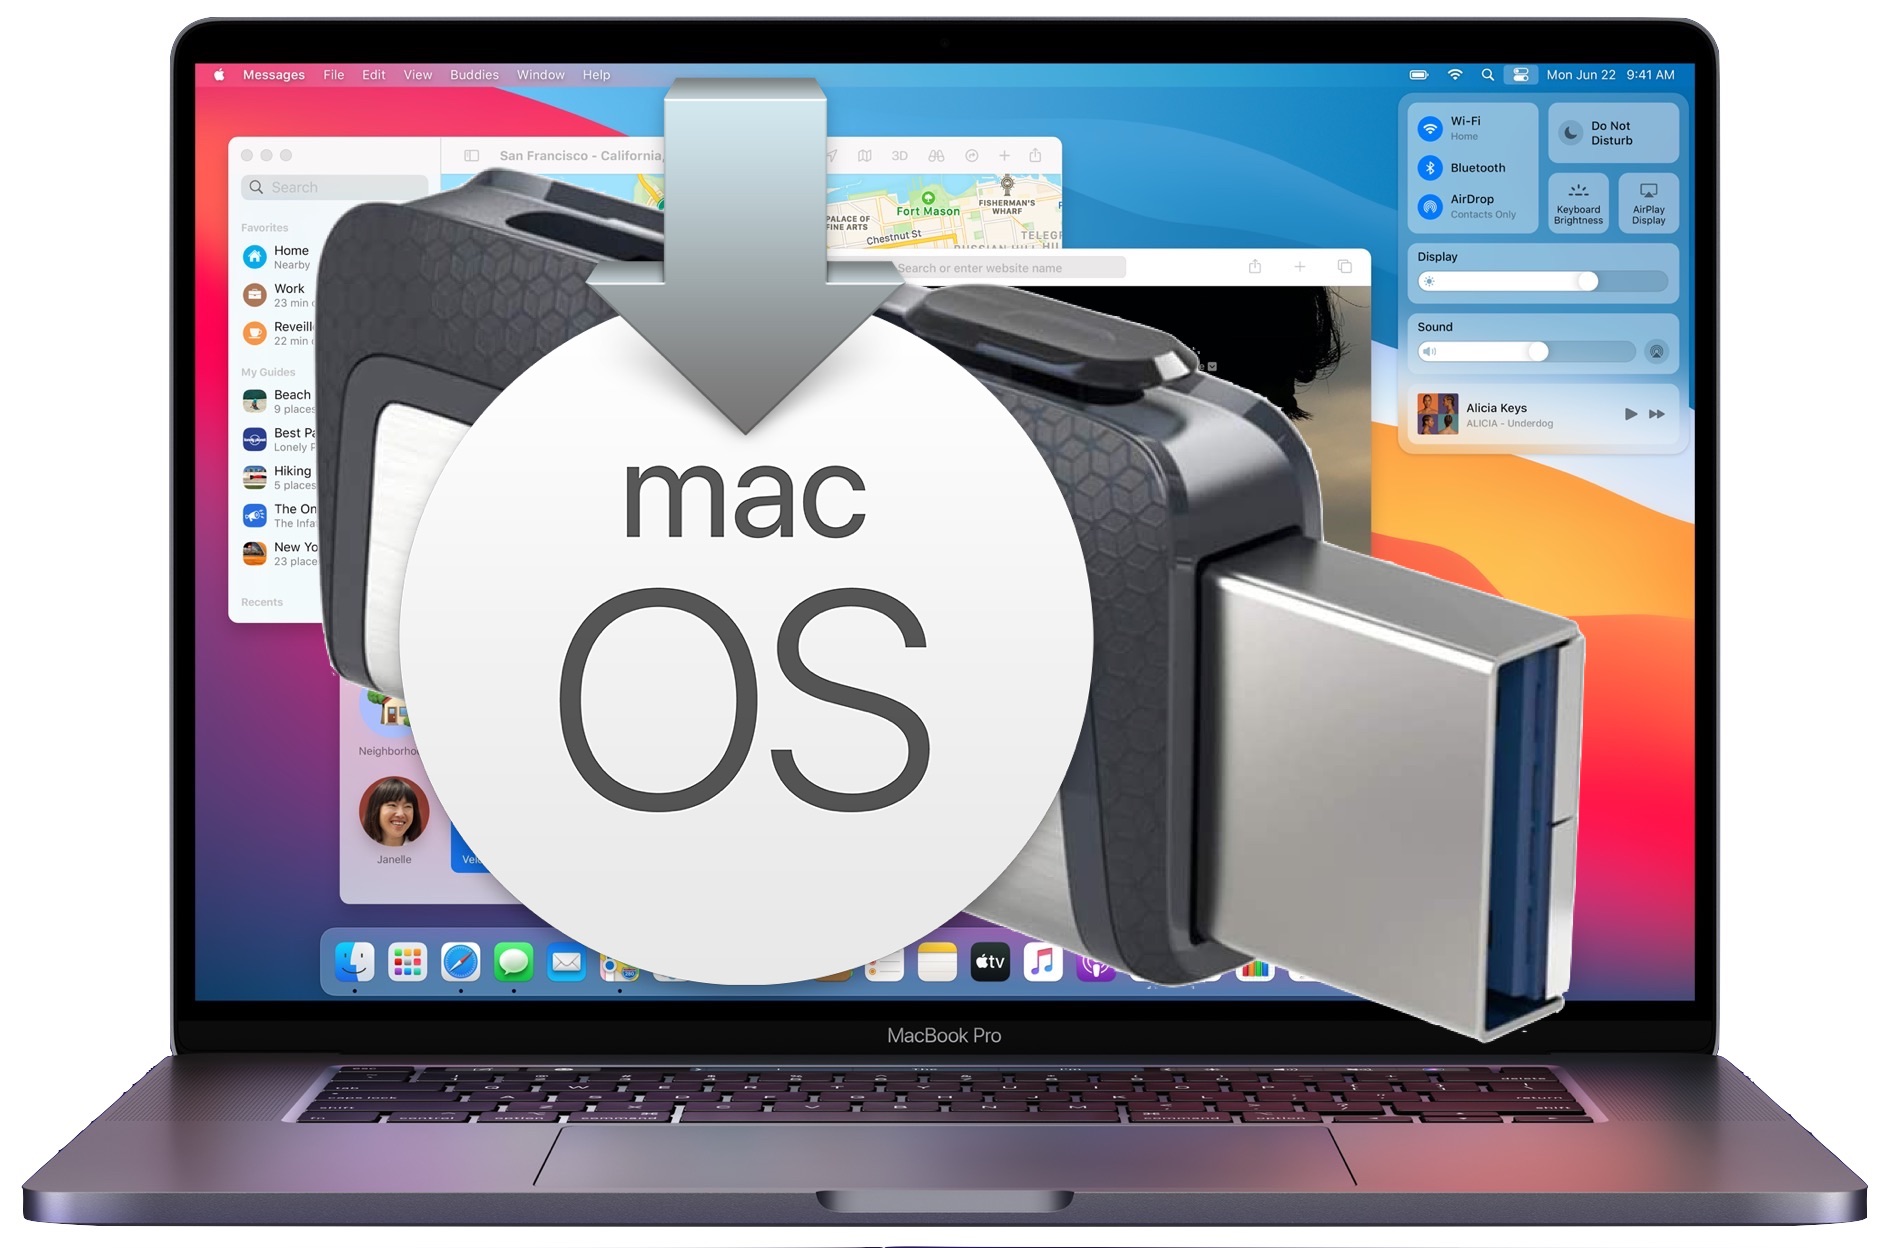 create usb bios flash disk for pc on mac